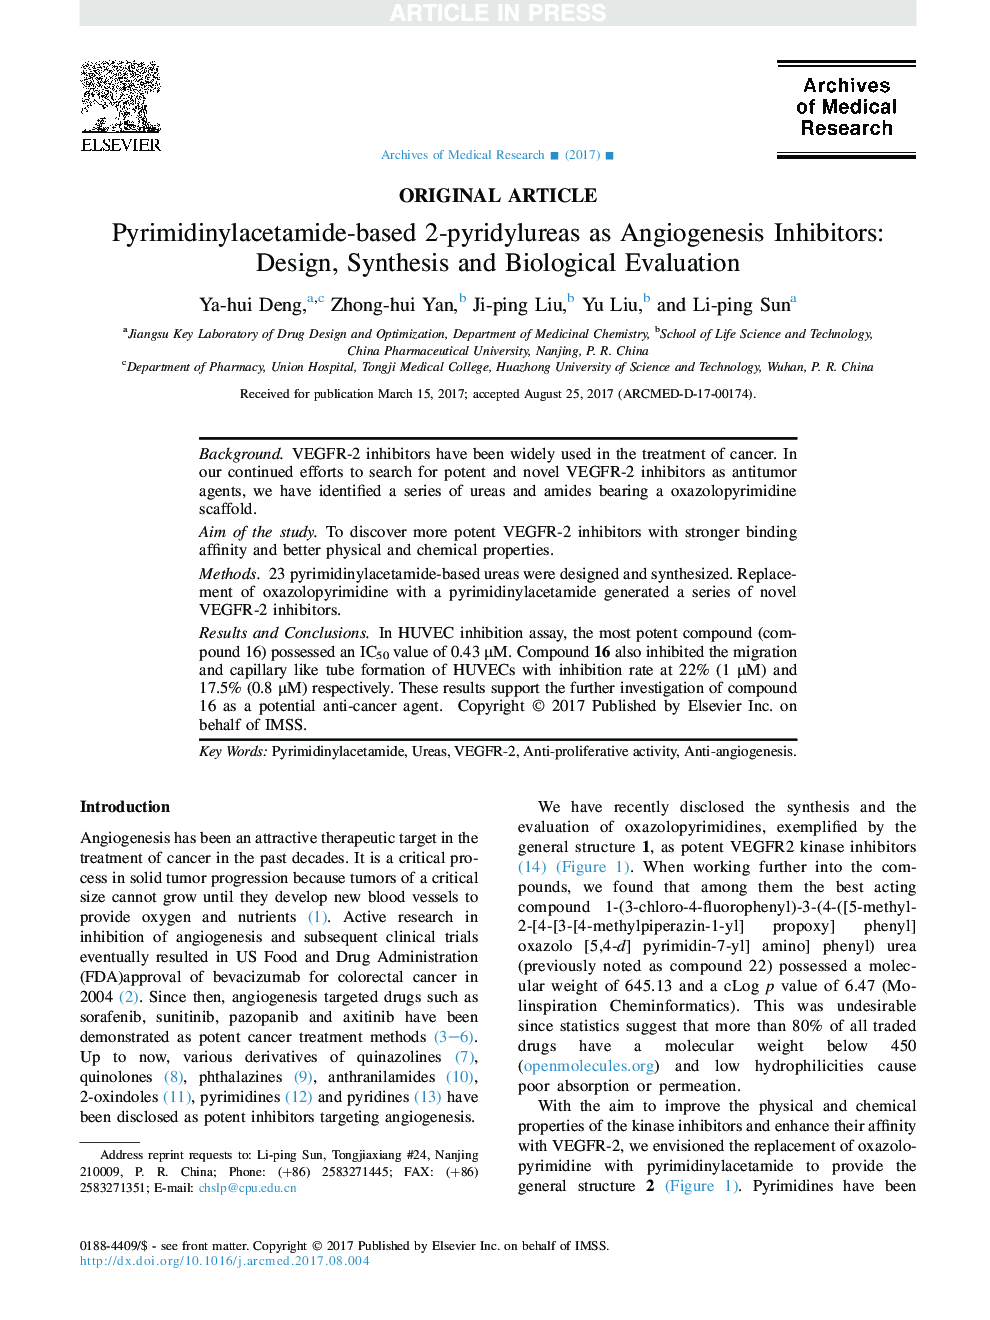 Pyrimidinylacetamide-based 2-pyridylureas as Angiogenesis Inhibitors: Design, Synthesis and Biological Evaluation